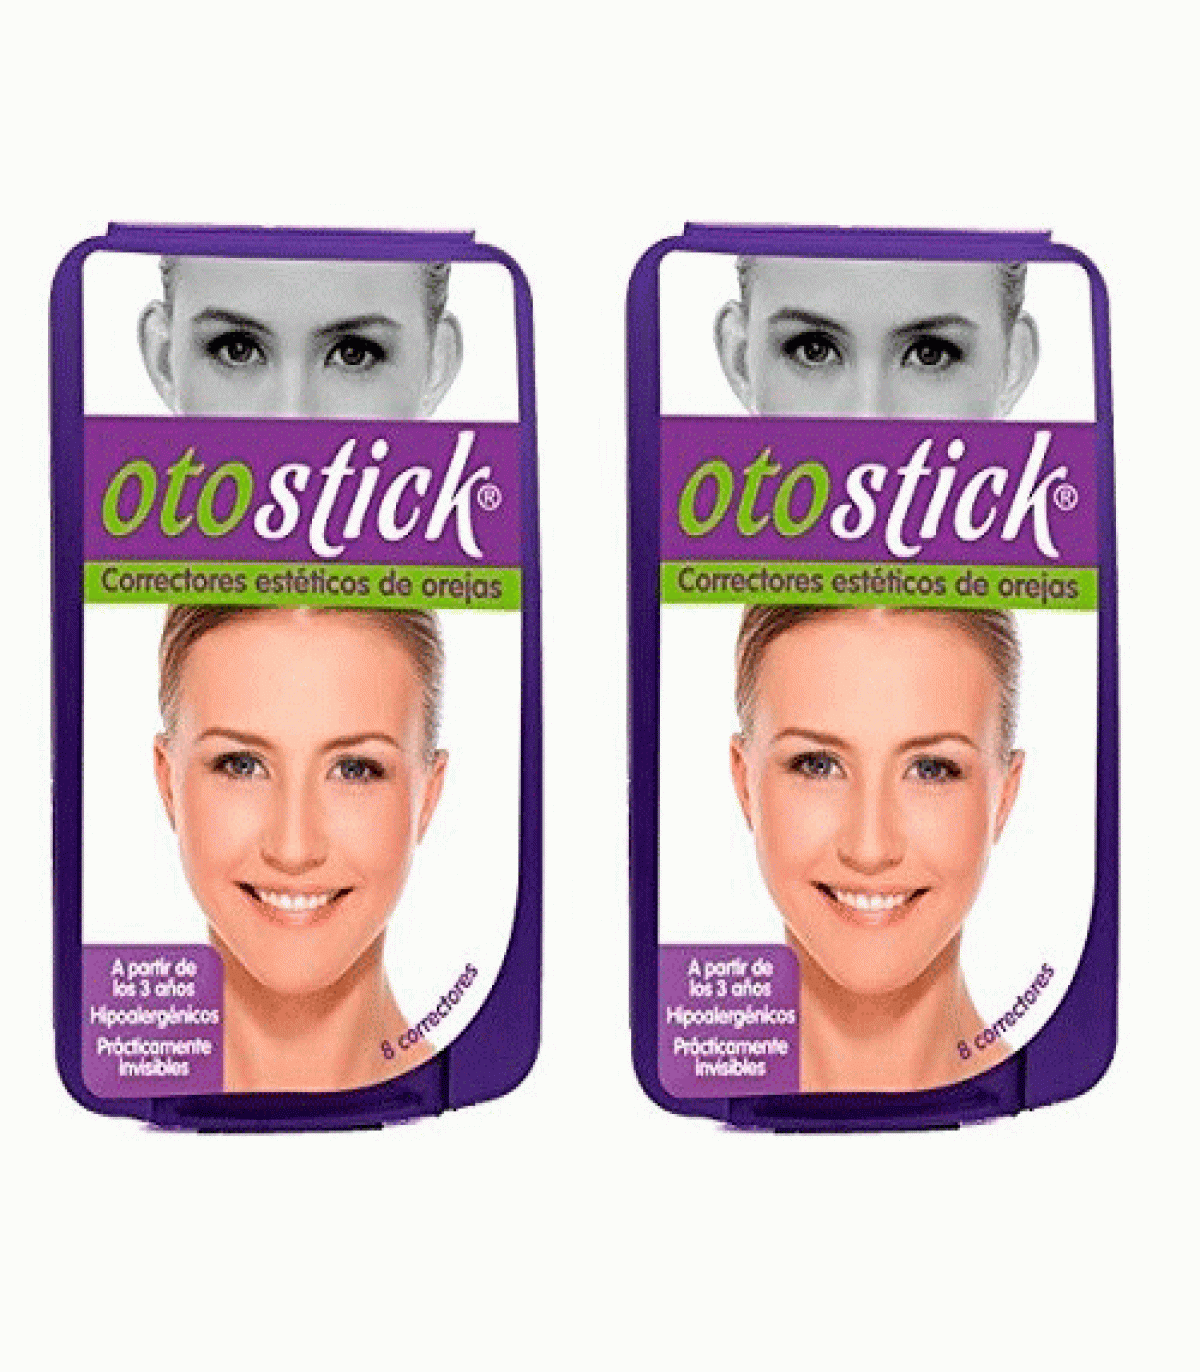 otostick - Otostick es un corrector estético para orejas